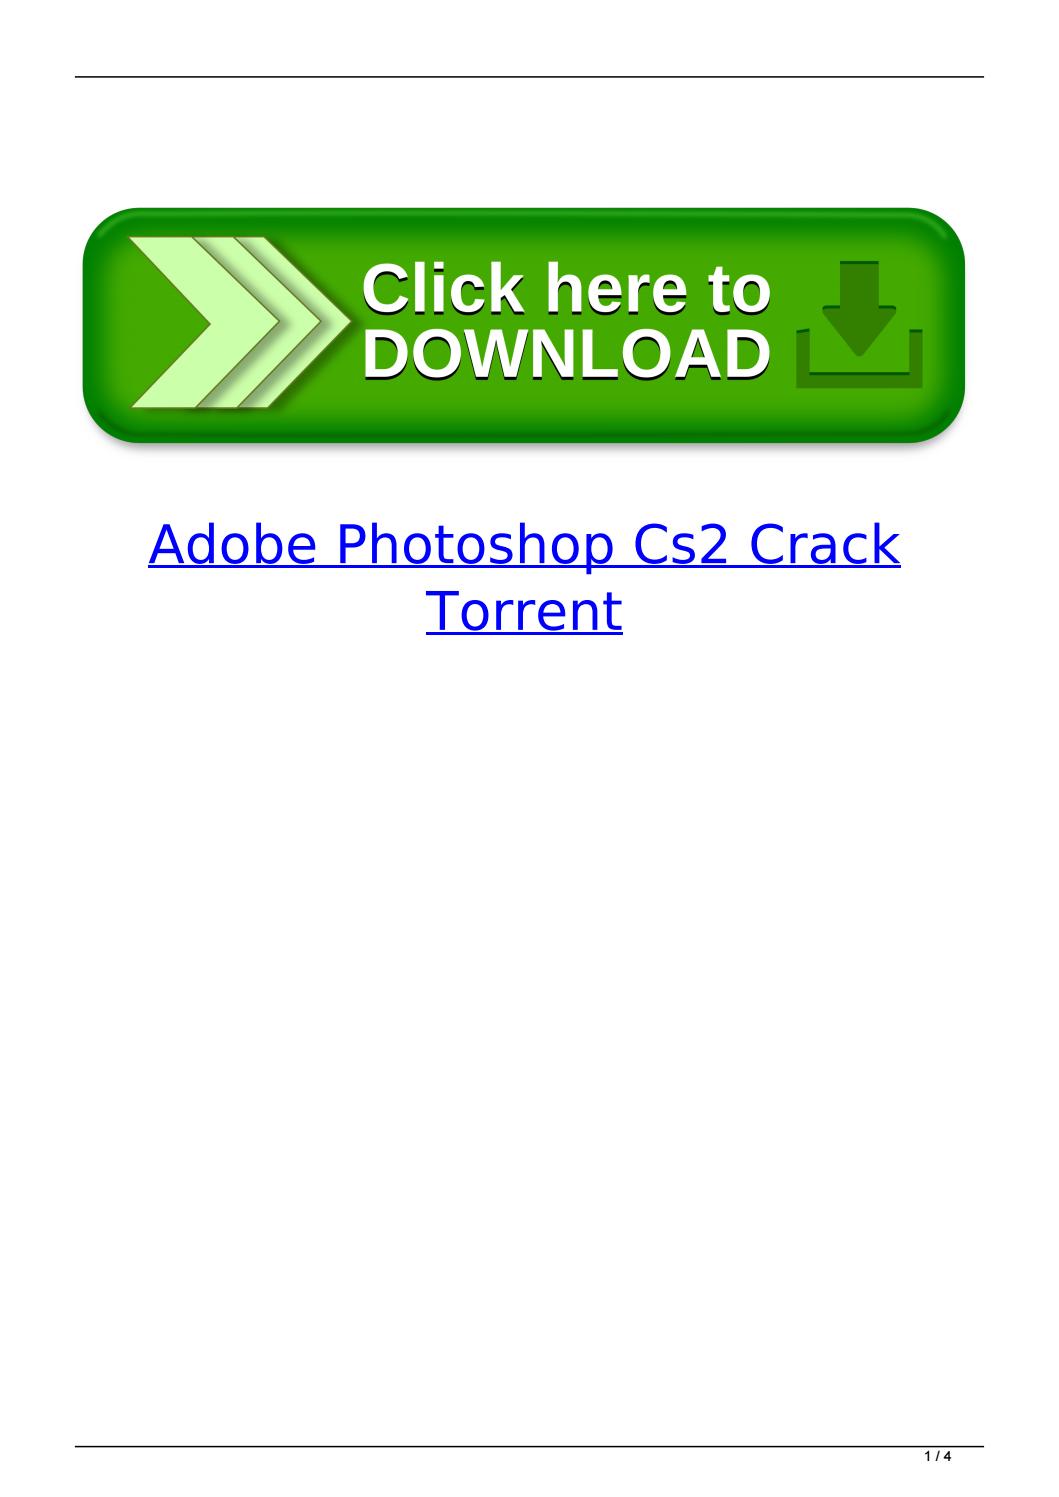 Adobe photoshop free trial